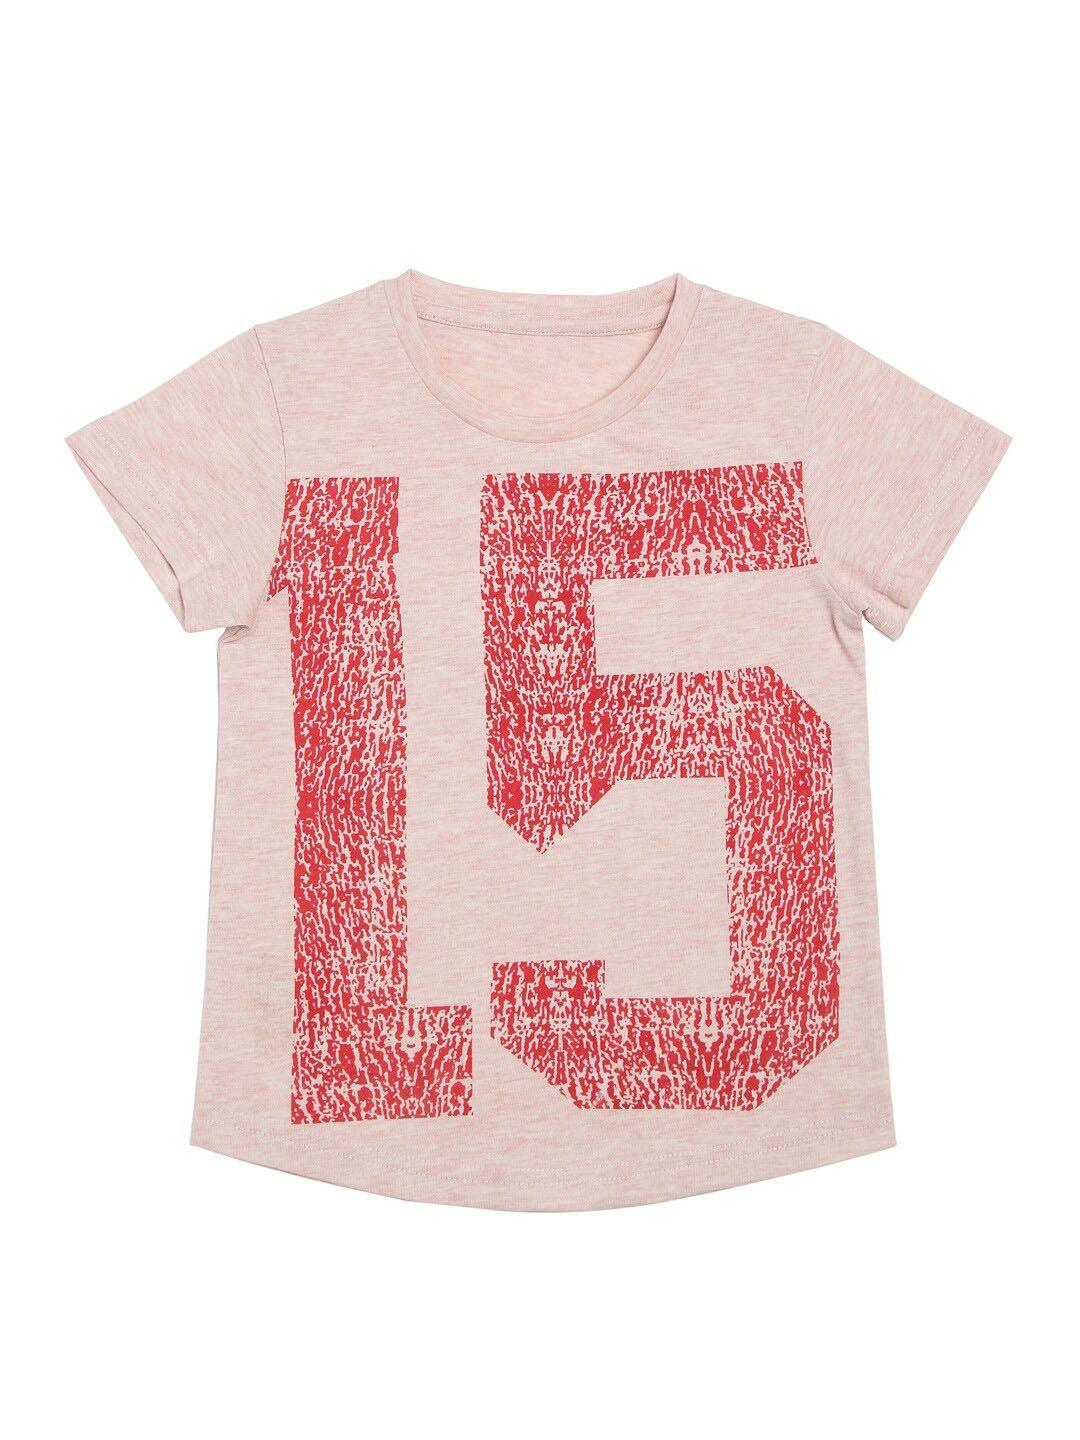 door74 boys typography printed cotton t-shirt